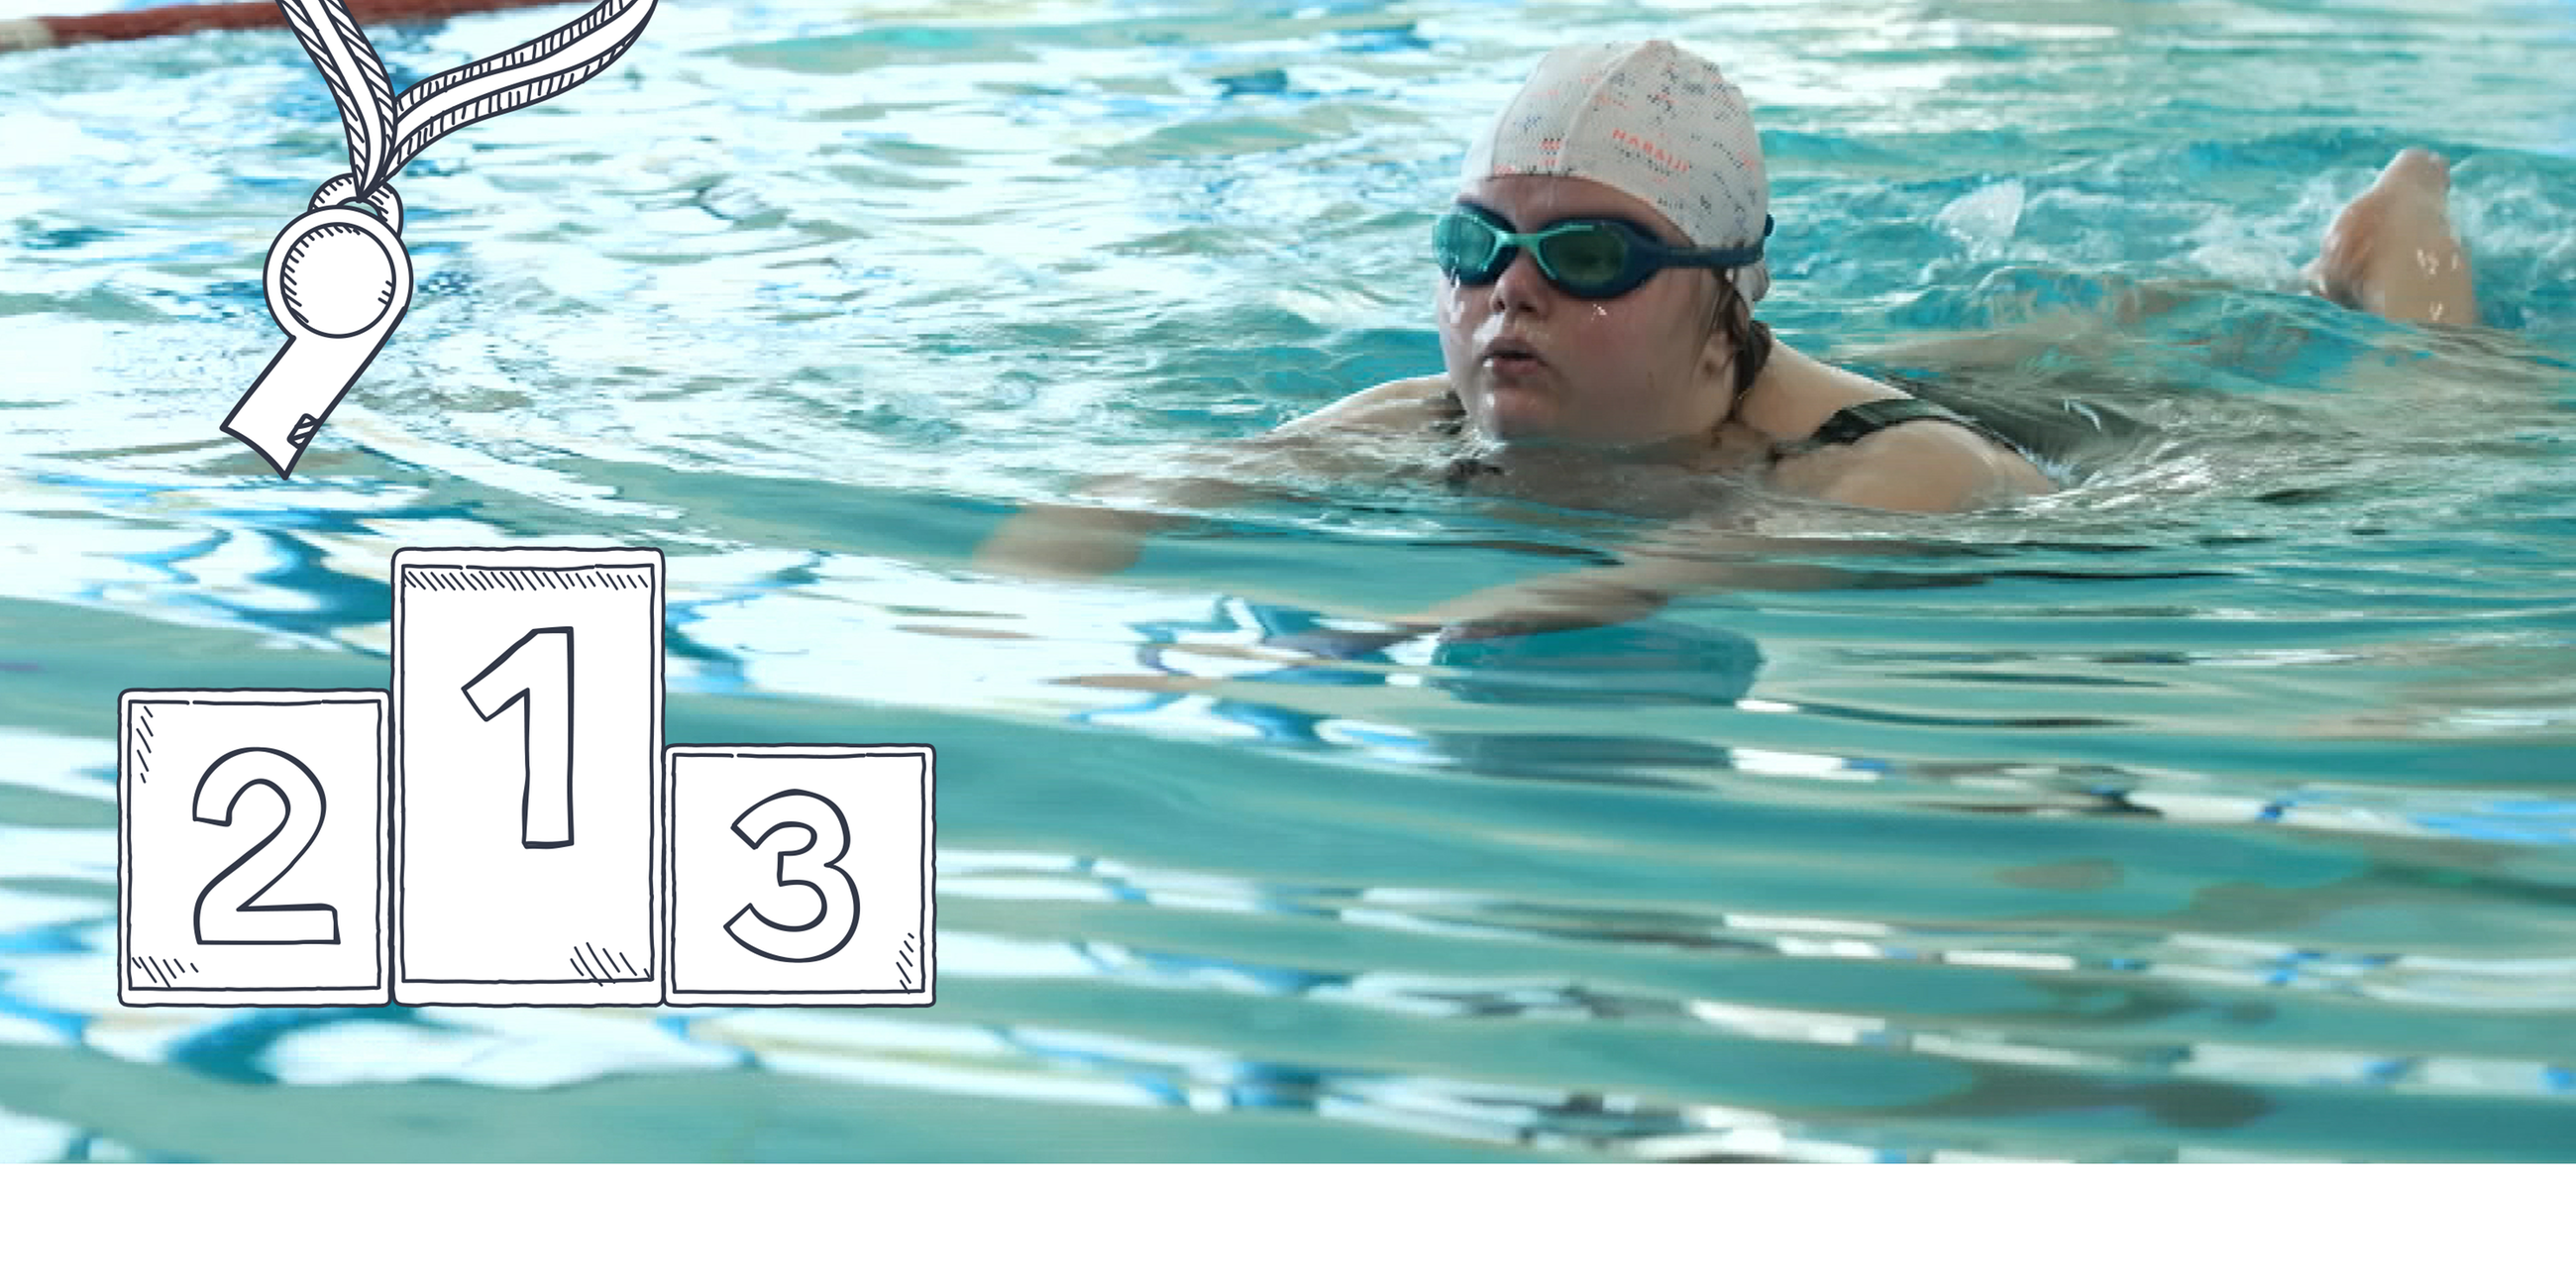 Grafik: Schwimmerin Special Olympics